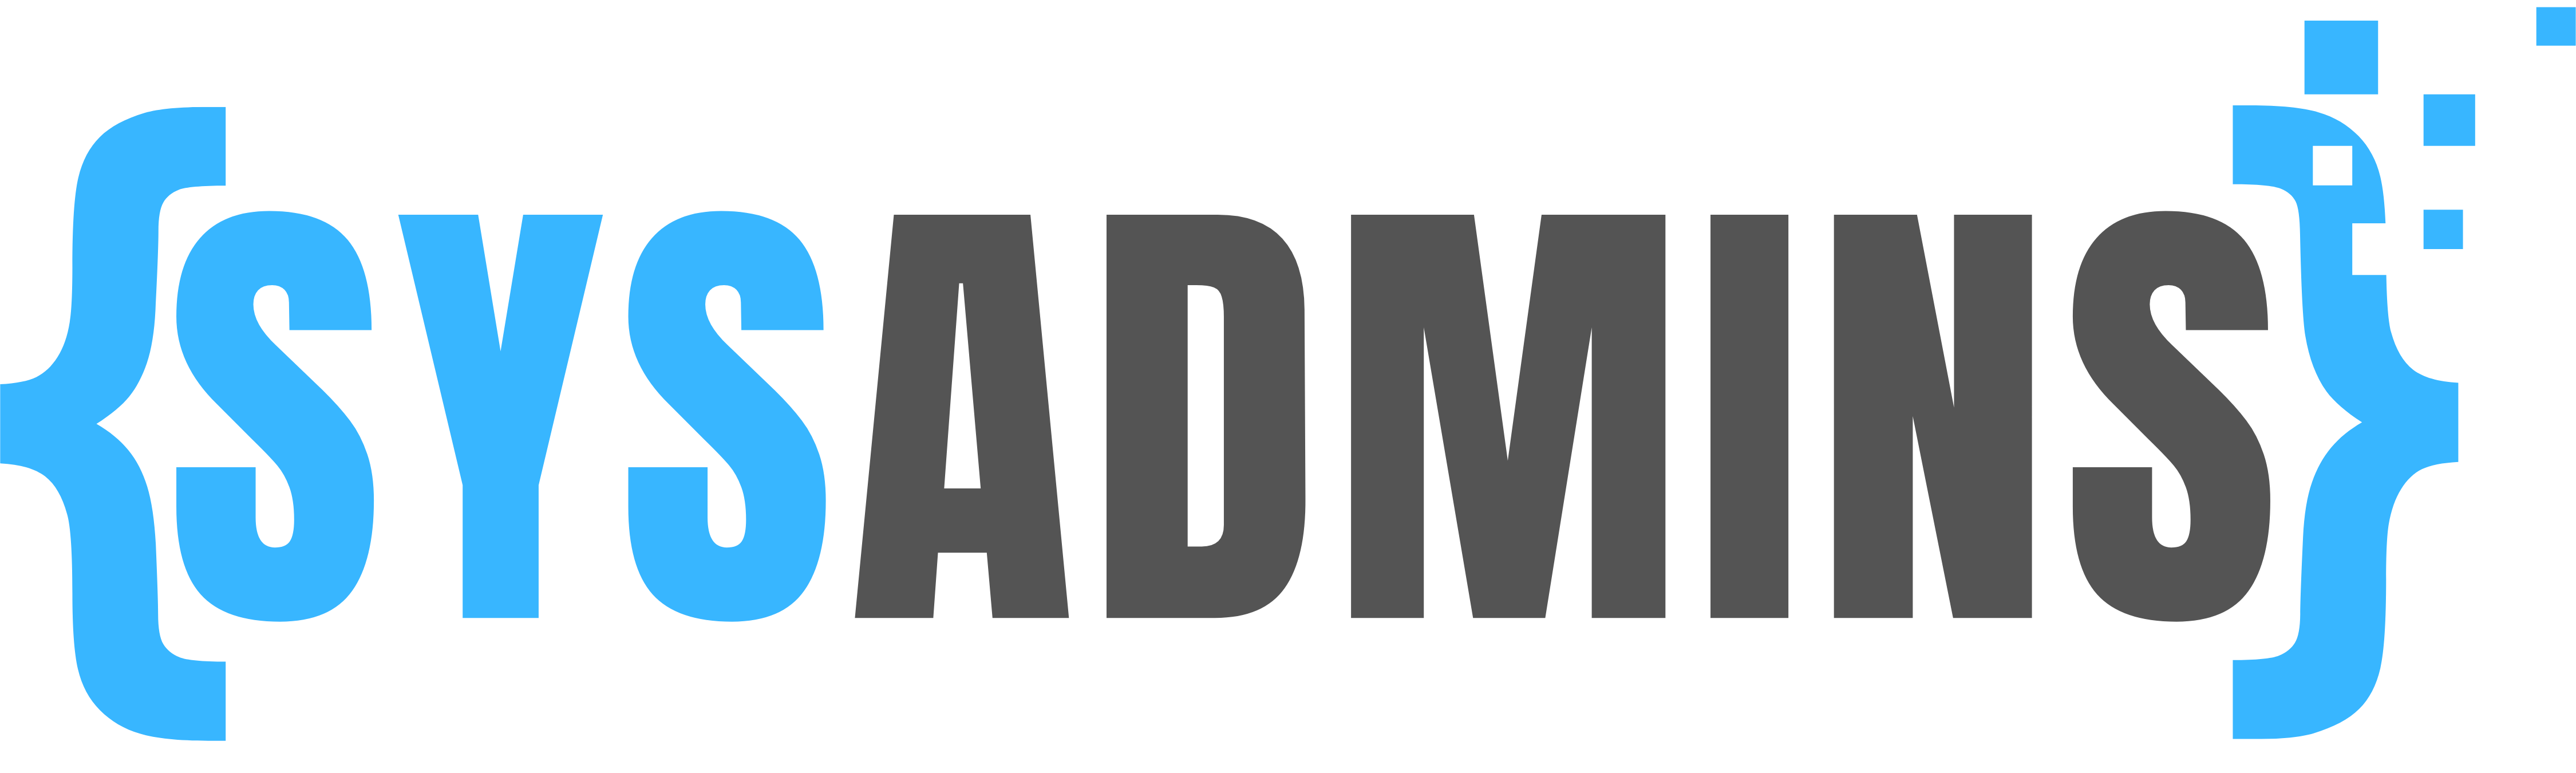 SysAdmins Tech logo